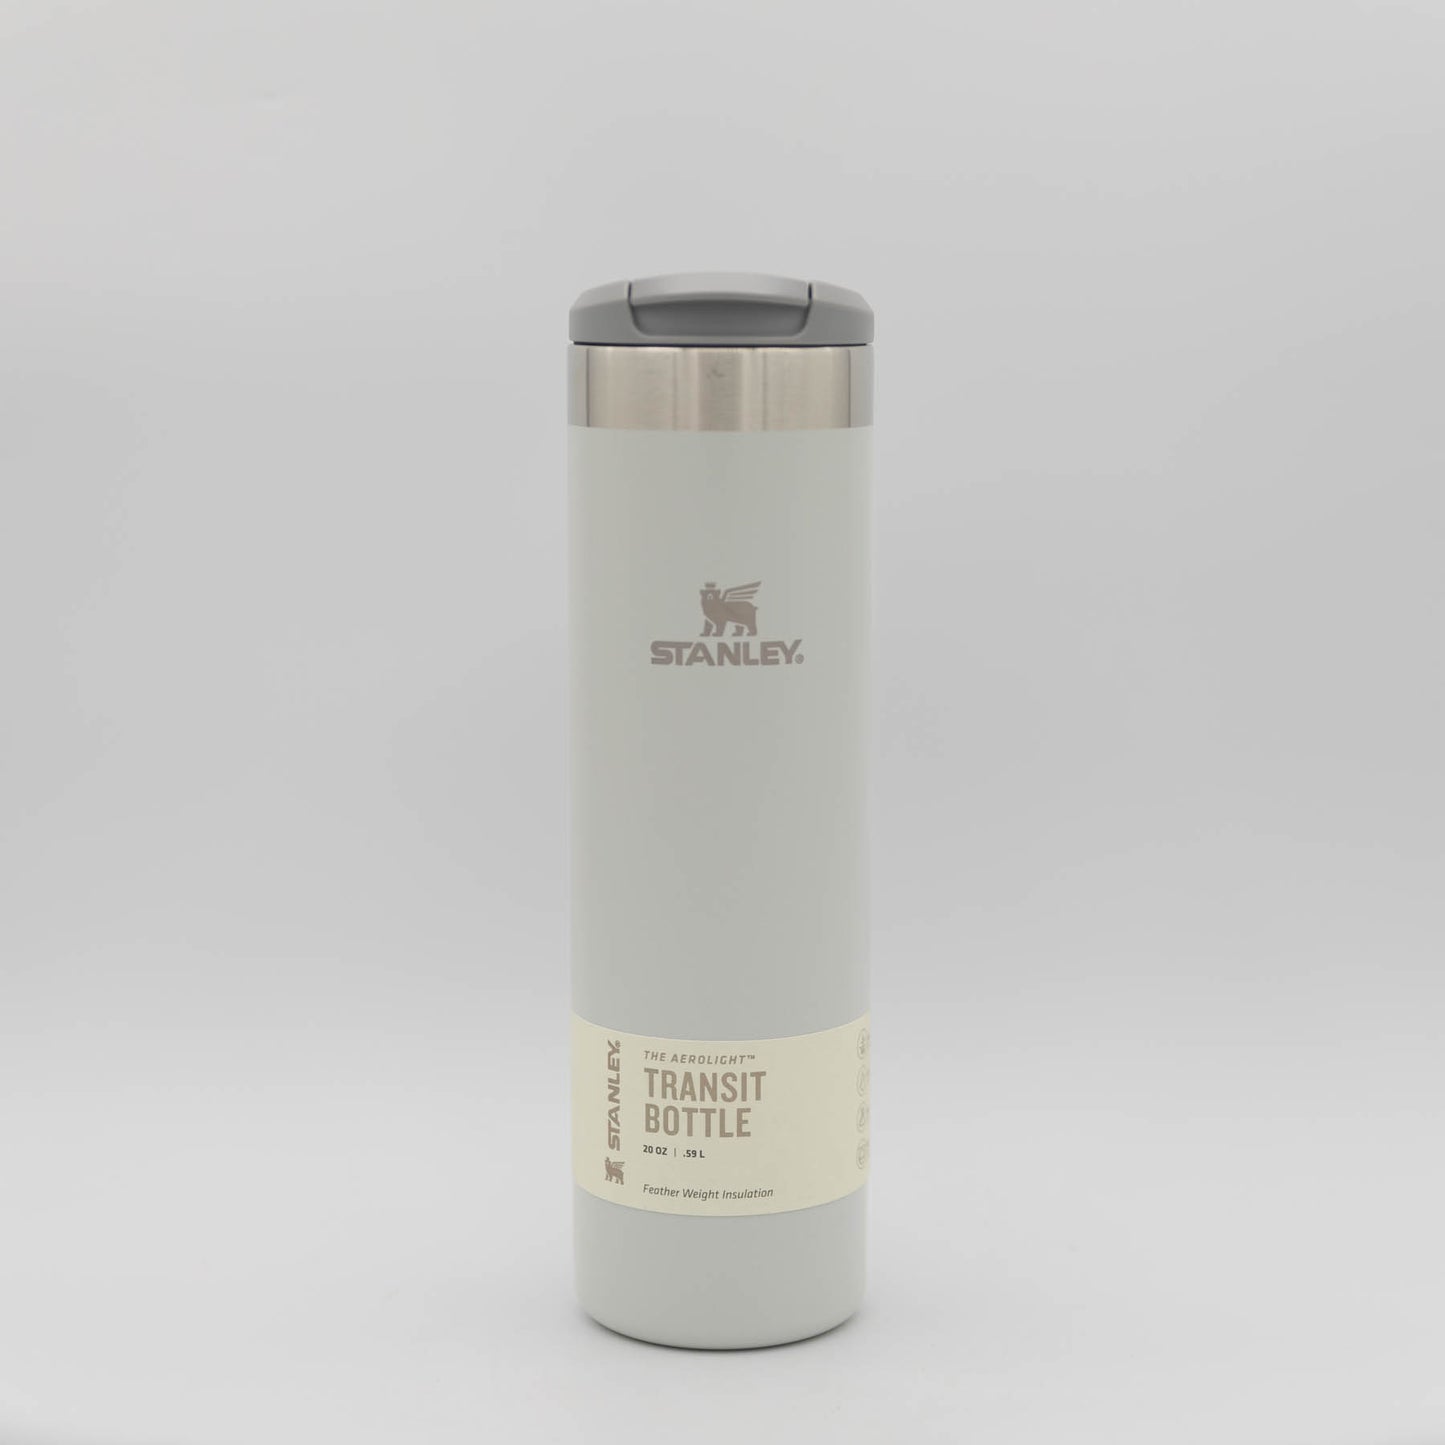 Stanley - The AeroLight™ Transit Bottle - Fog Glimmer - 20 oz / 0.59 L